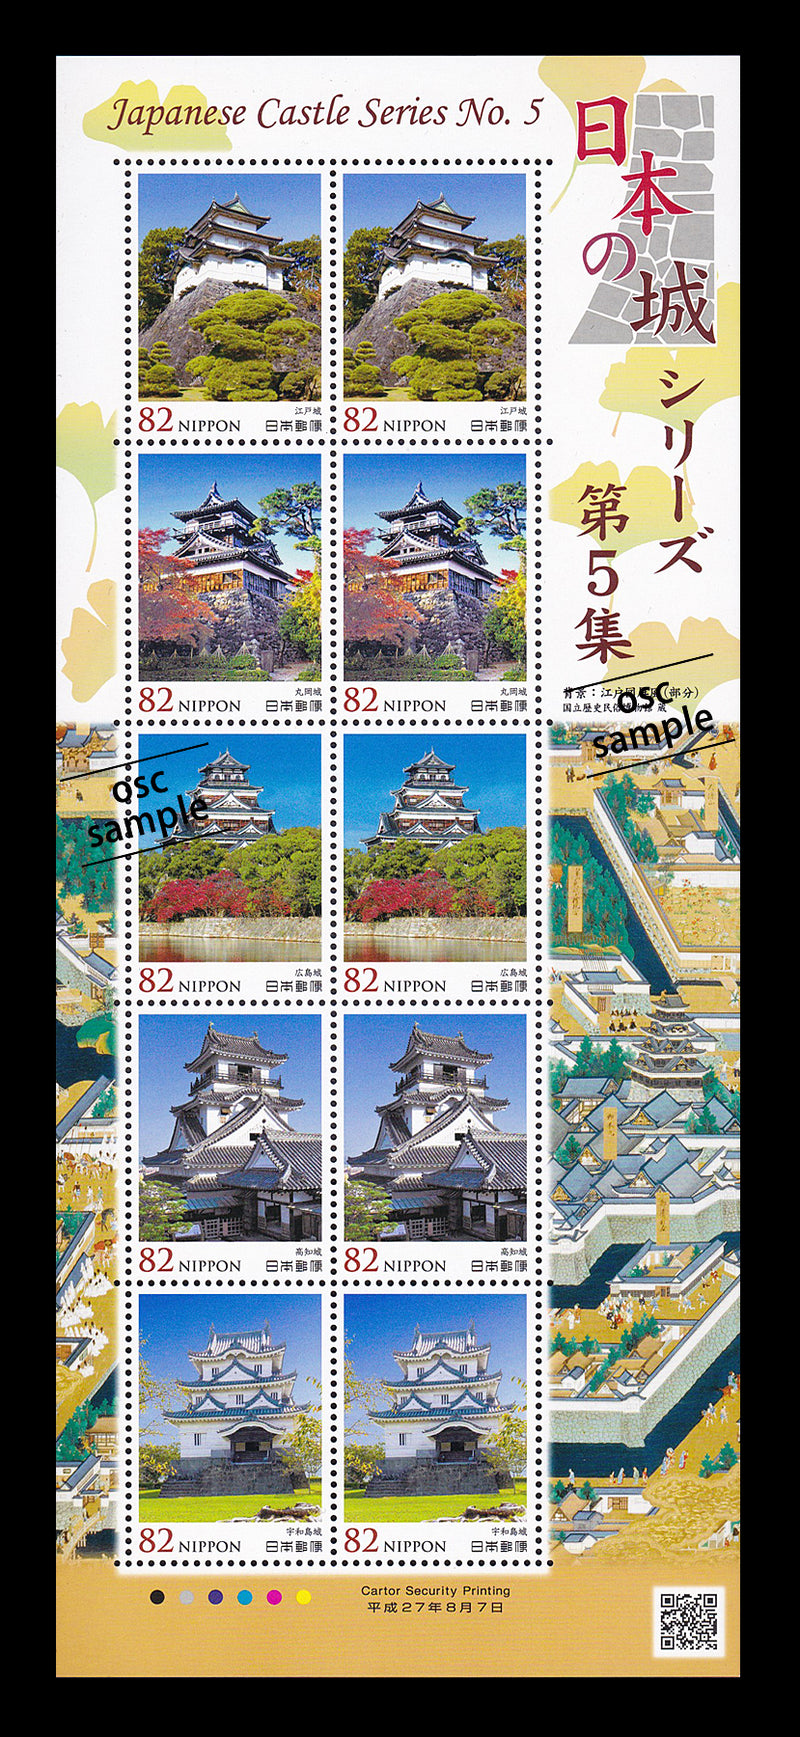 Japanese Castle Series No.5